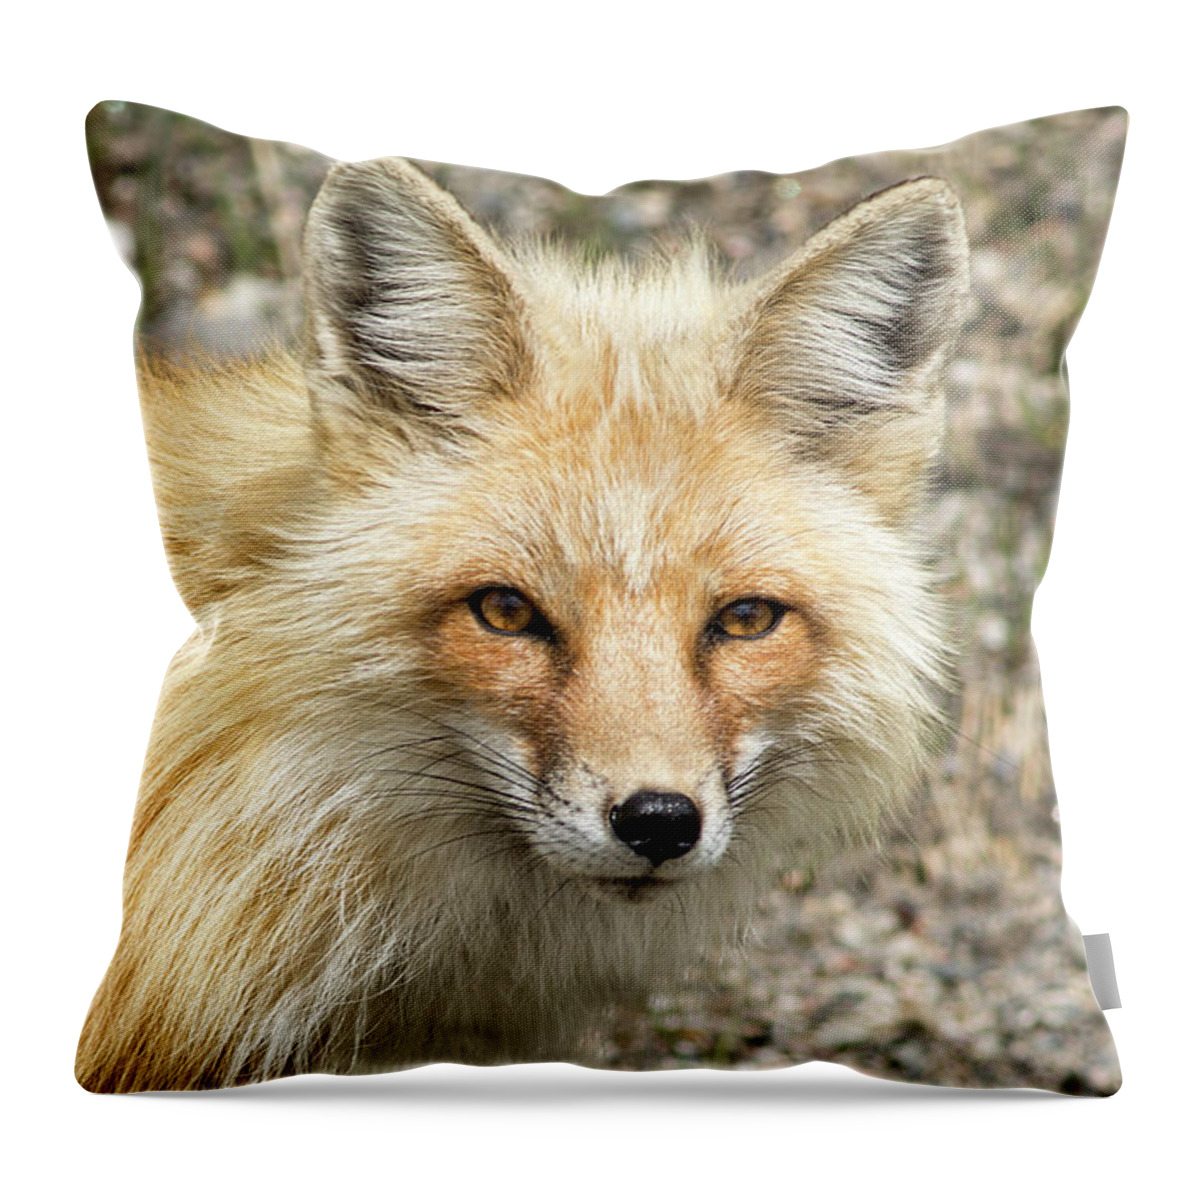 Fox Throw Pillow featuring the photograph The Gaze by Mark Harrington